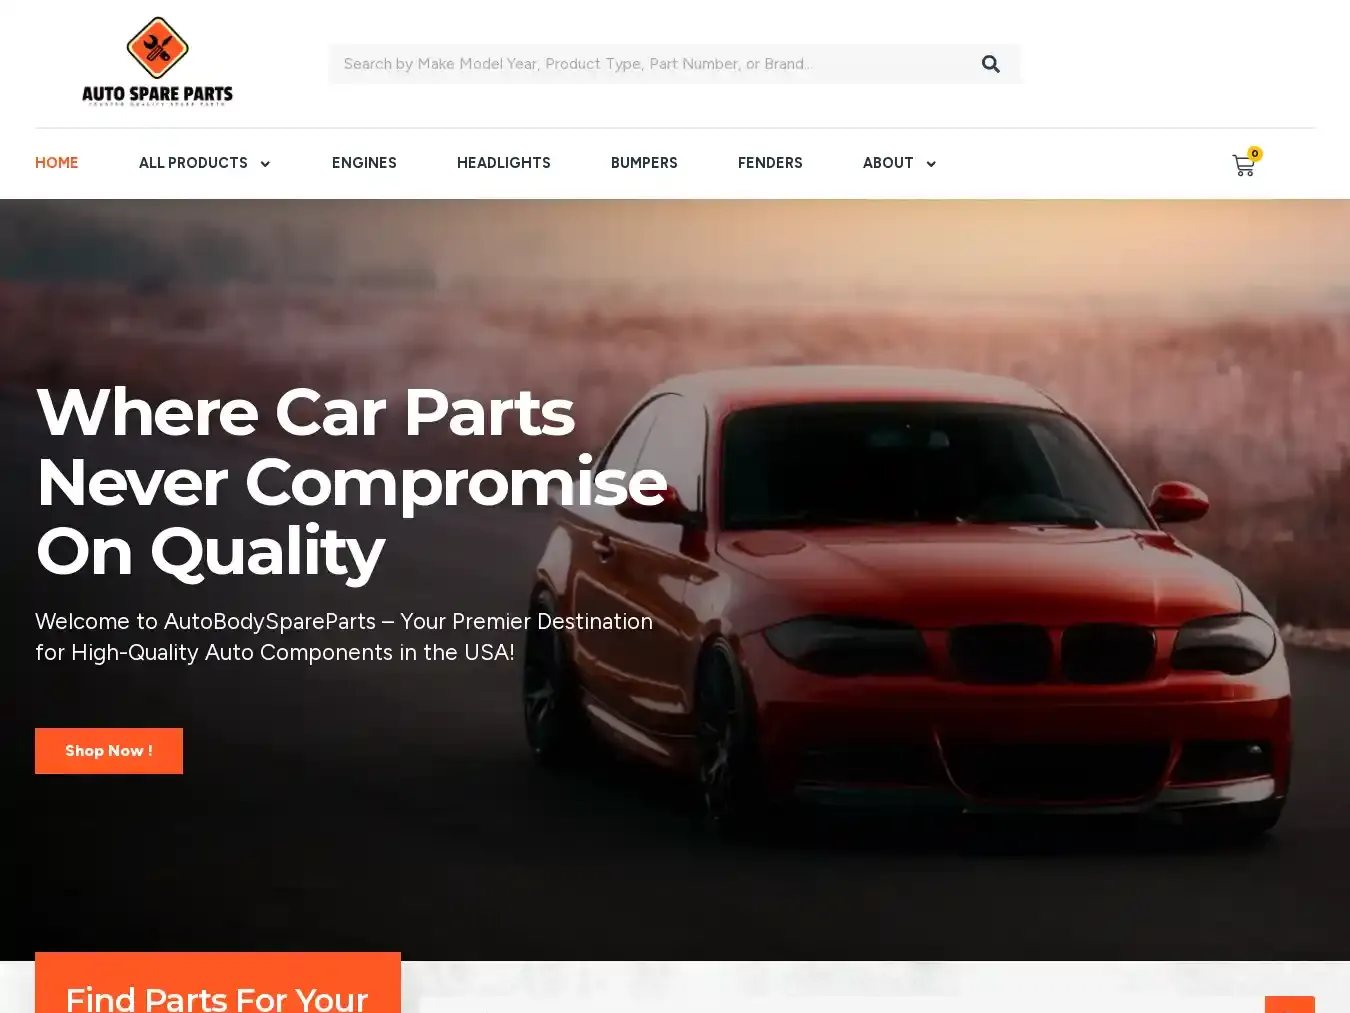 Autobodyspareparts.com Fraudulent Automobile website.